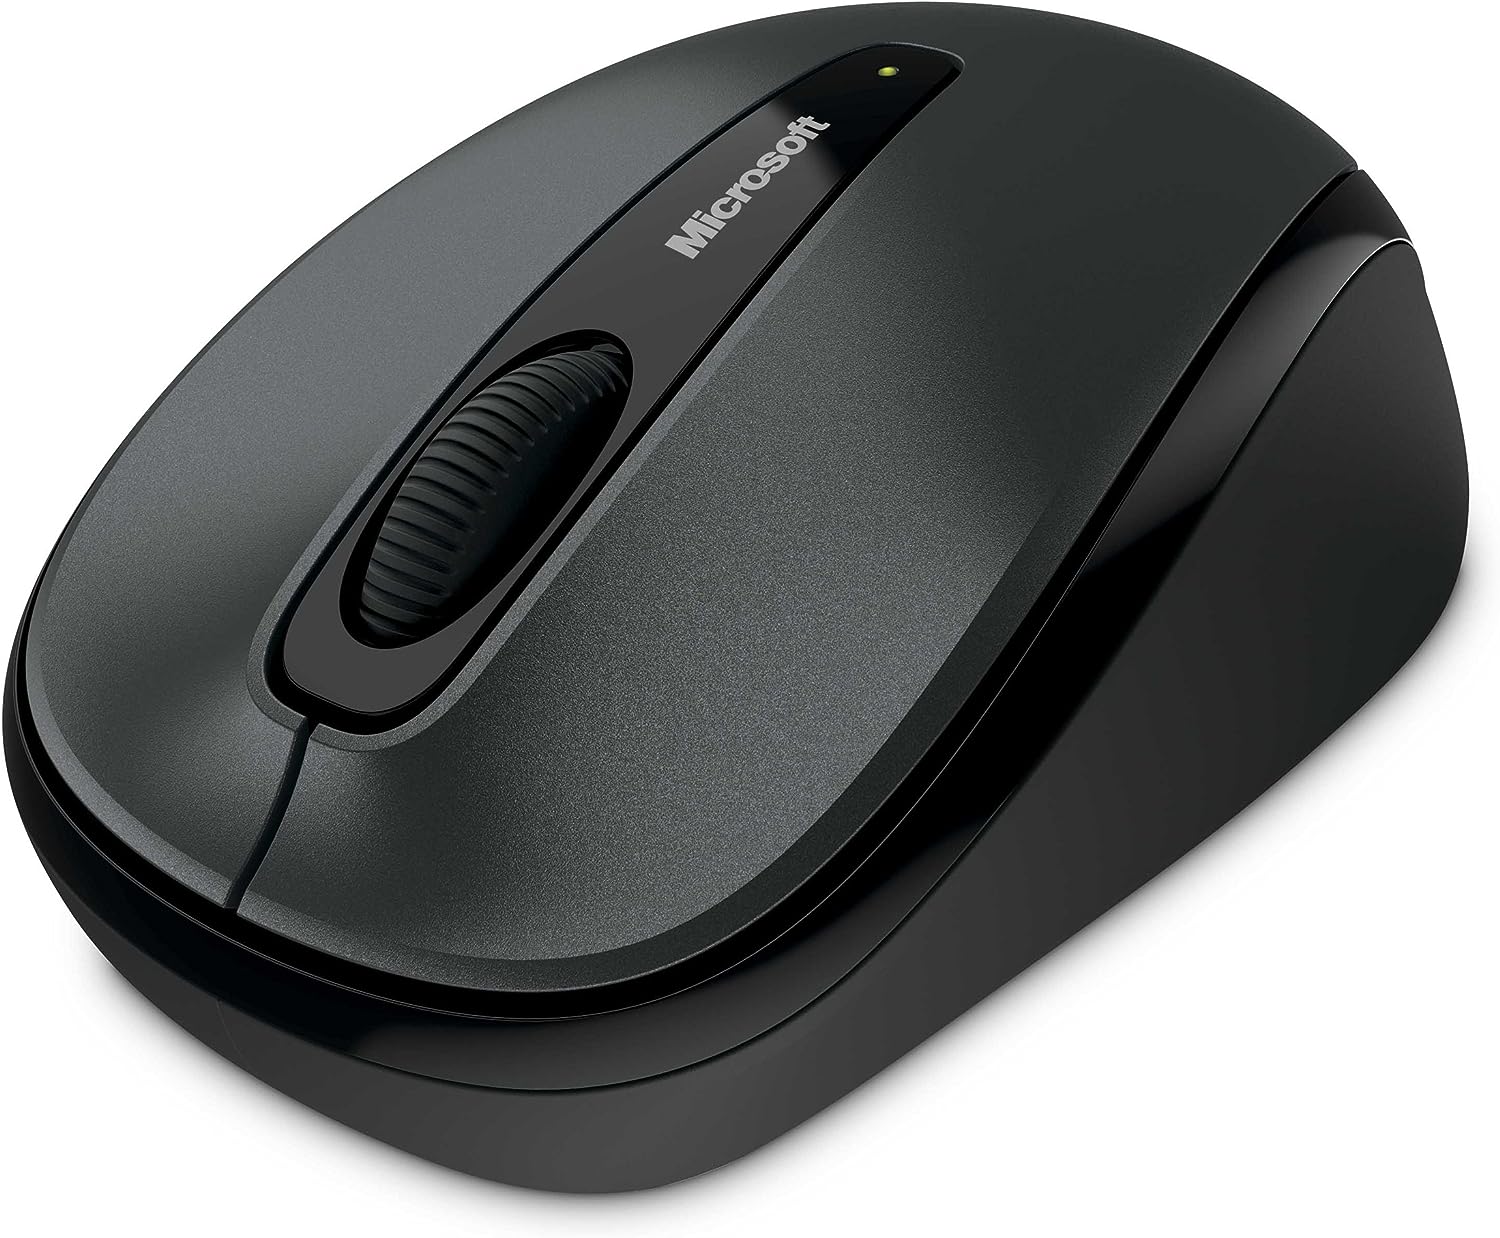 Microsoft Wireless Mobile 3500 Ambidextrous USB 2.0 Mouse - Loch Ness Grey (Certified Refurbished)